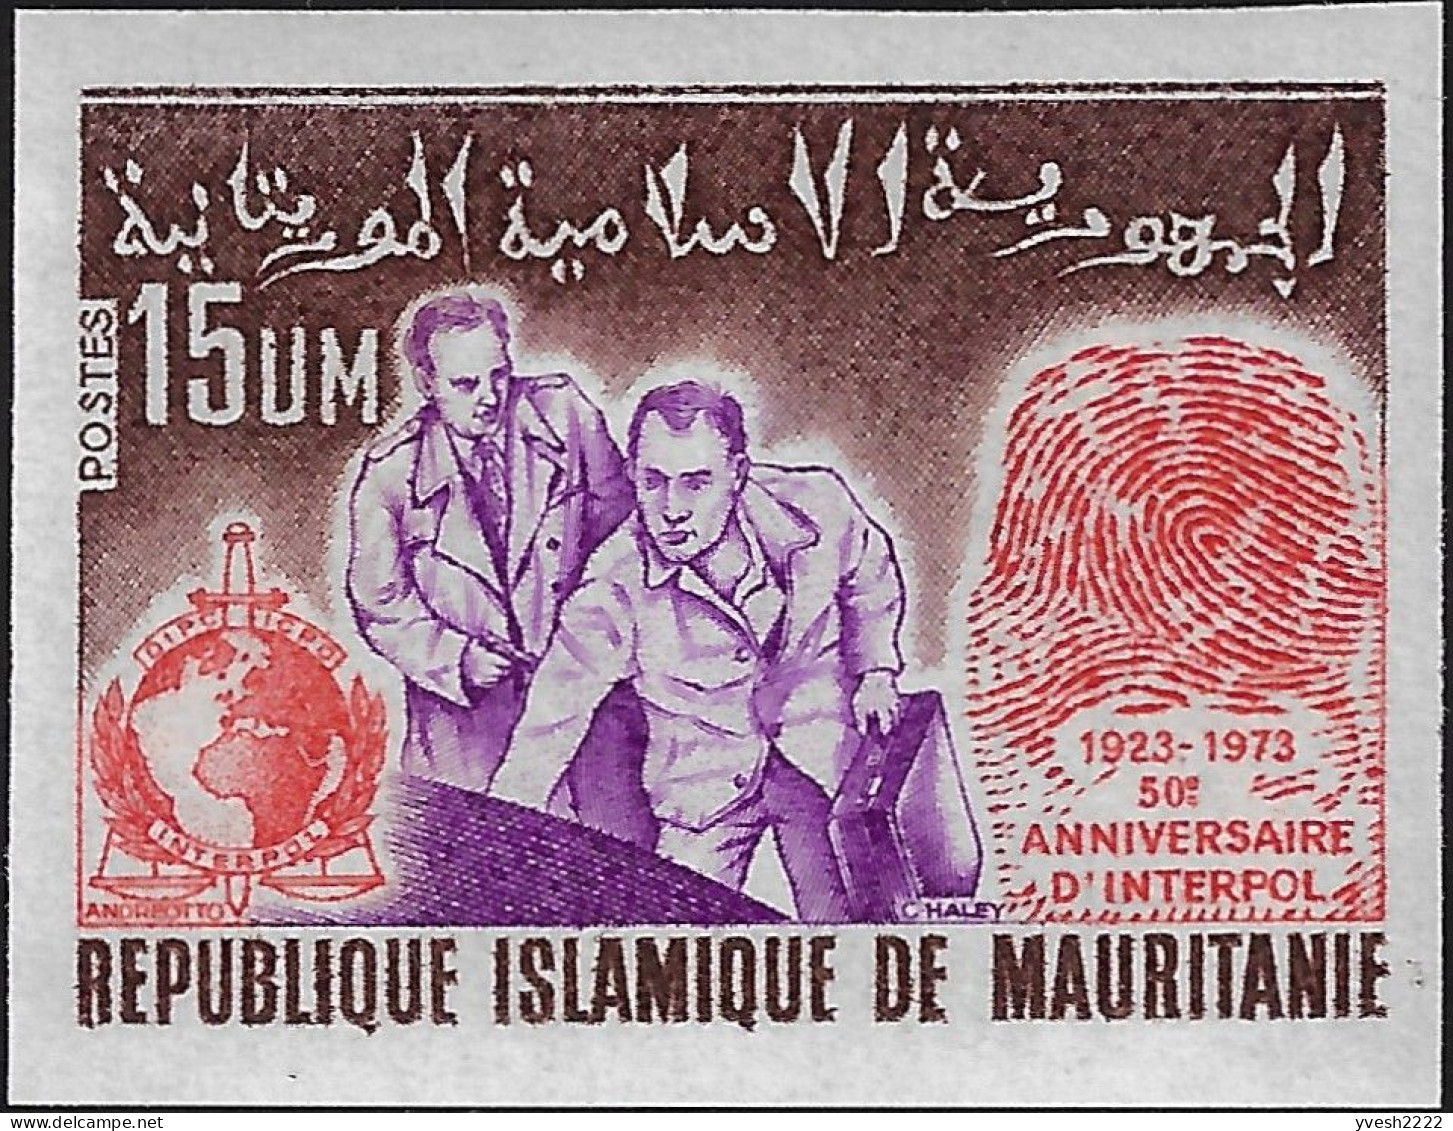 Mauritanie 1973  Y&T 310 Non Dentelé. 50 Ans D'Interpol. Empreinte Digitale, Interpol - Policia – Guardia Civil